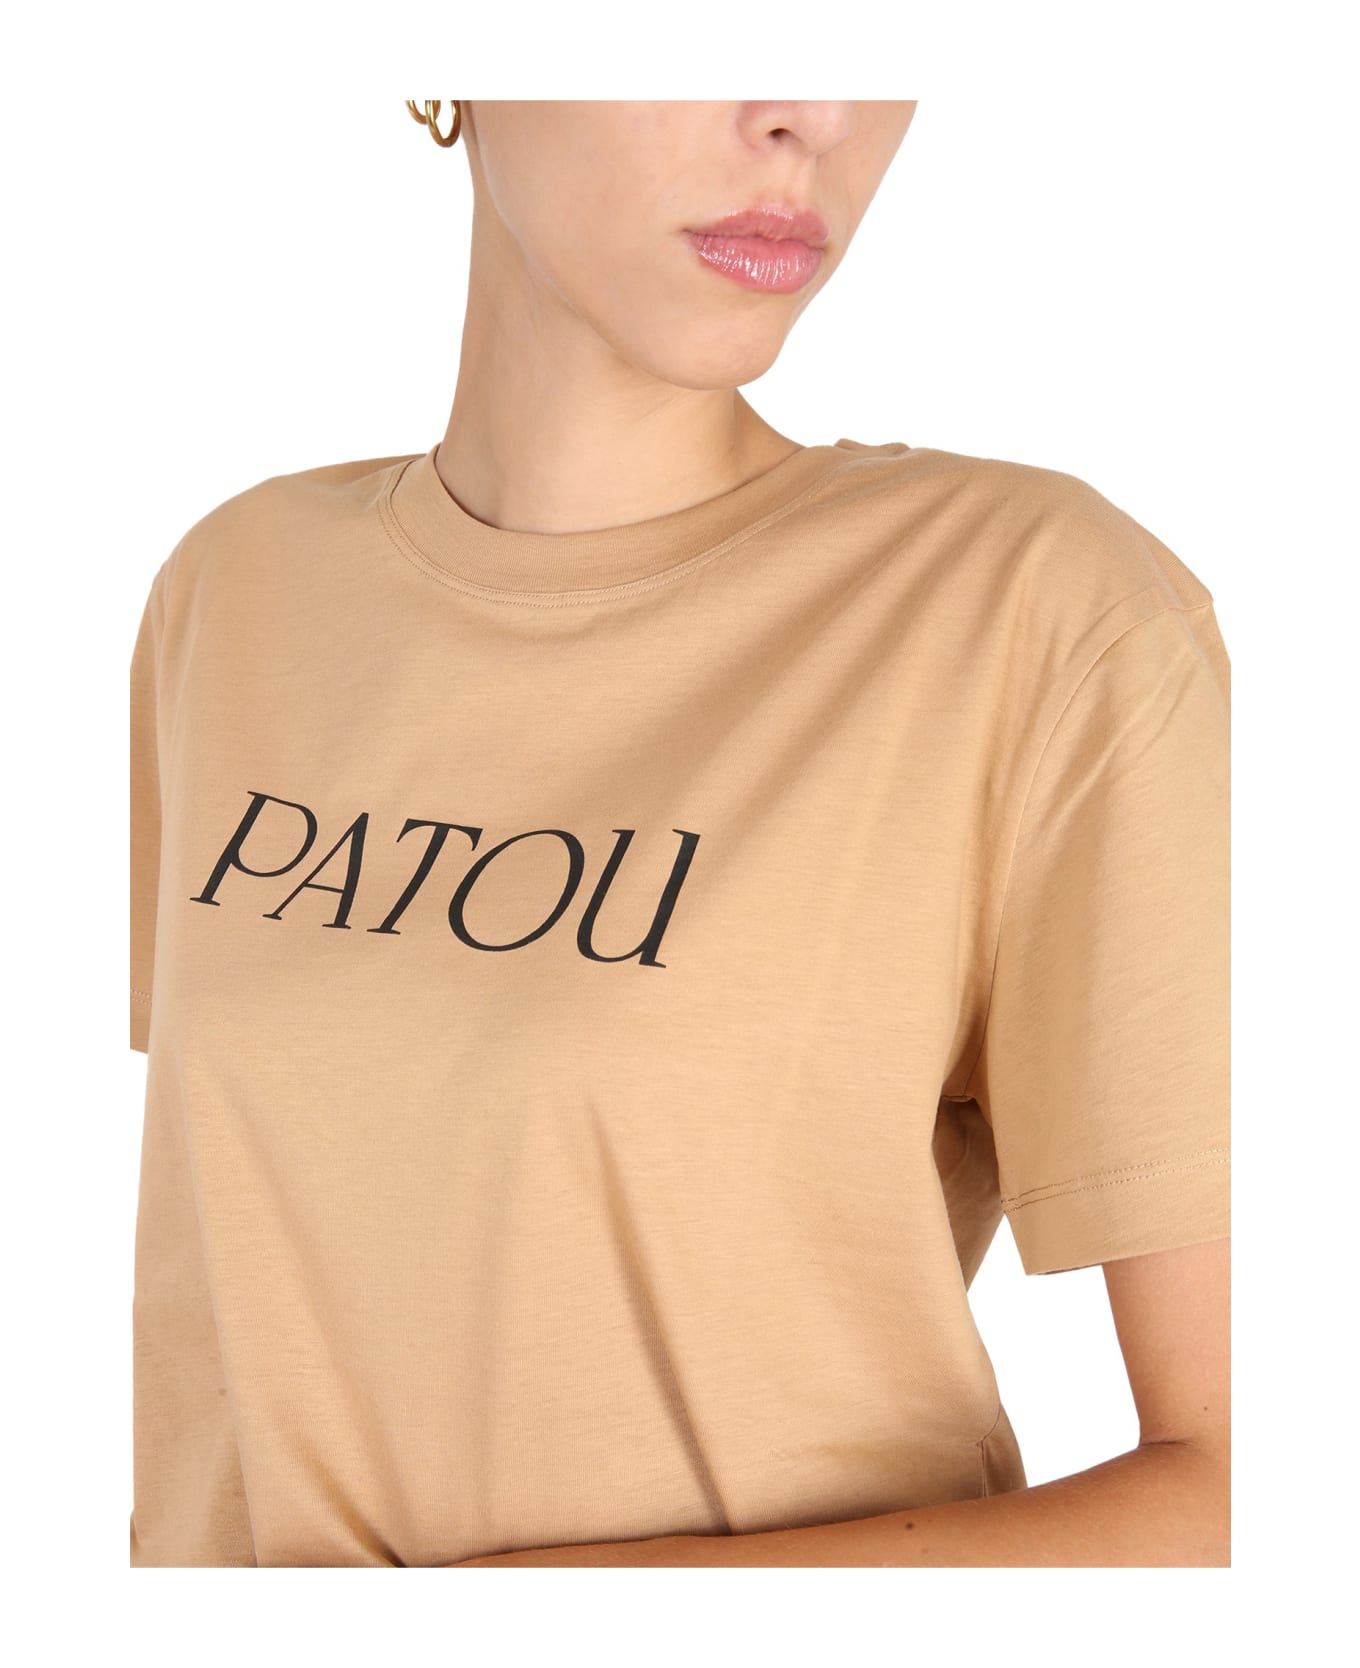 Patou T-shirt With Logo